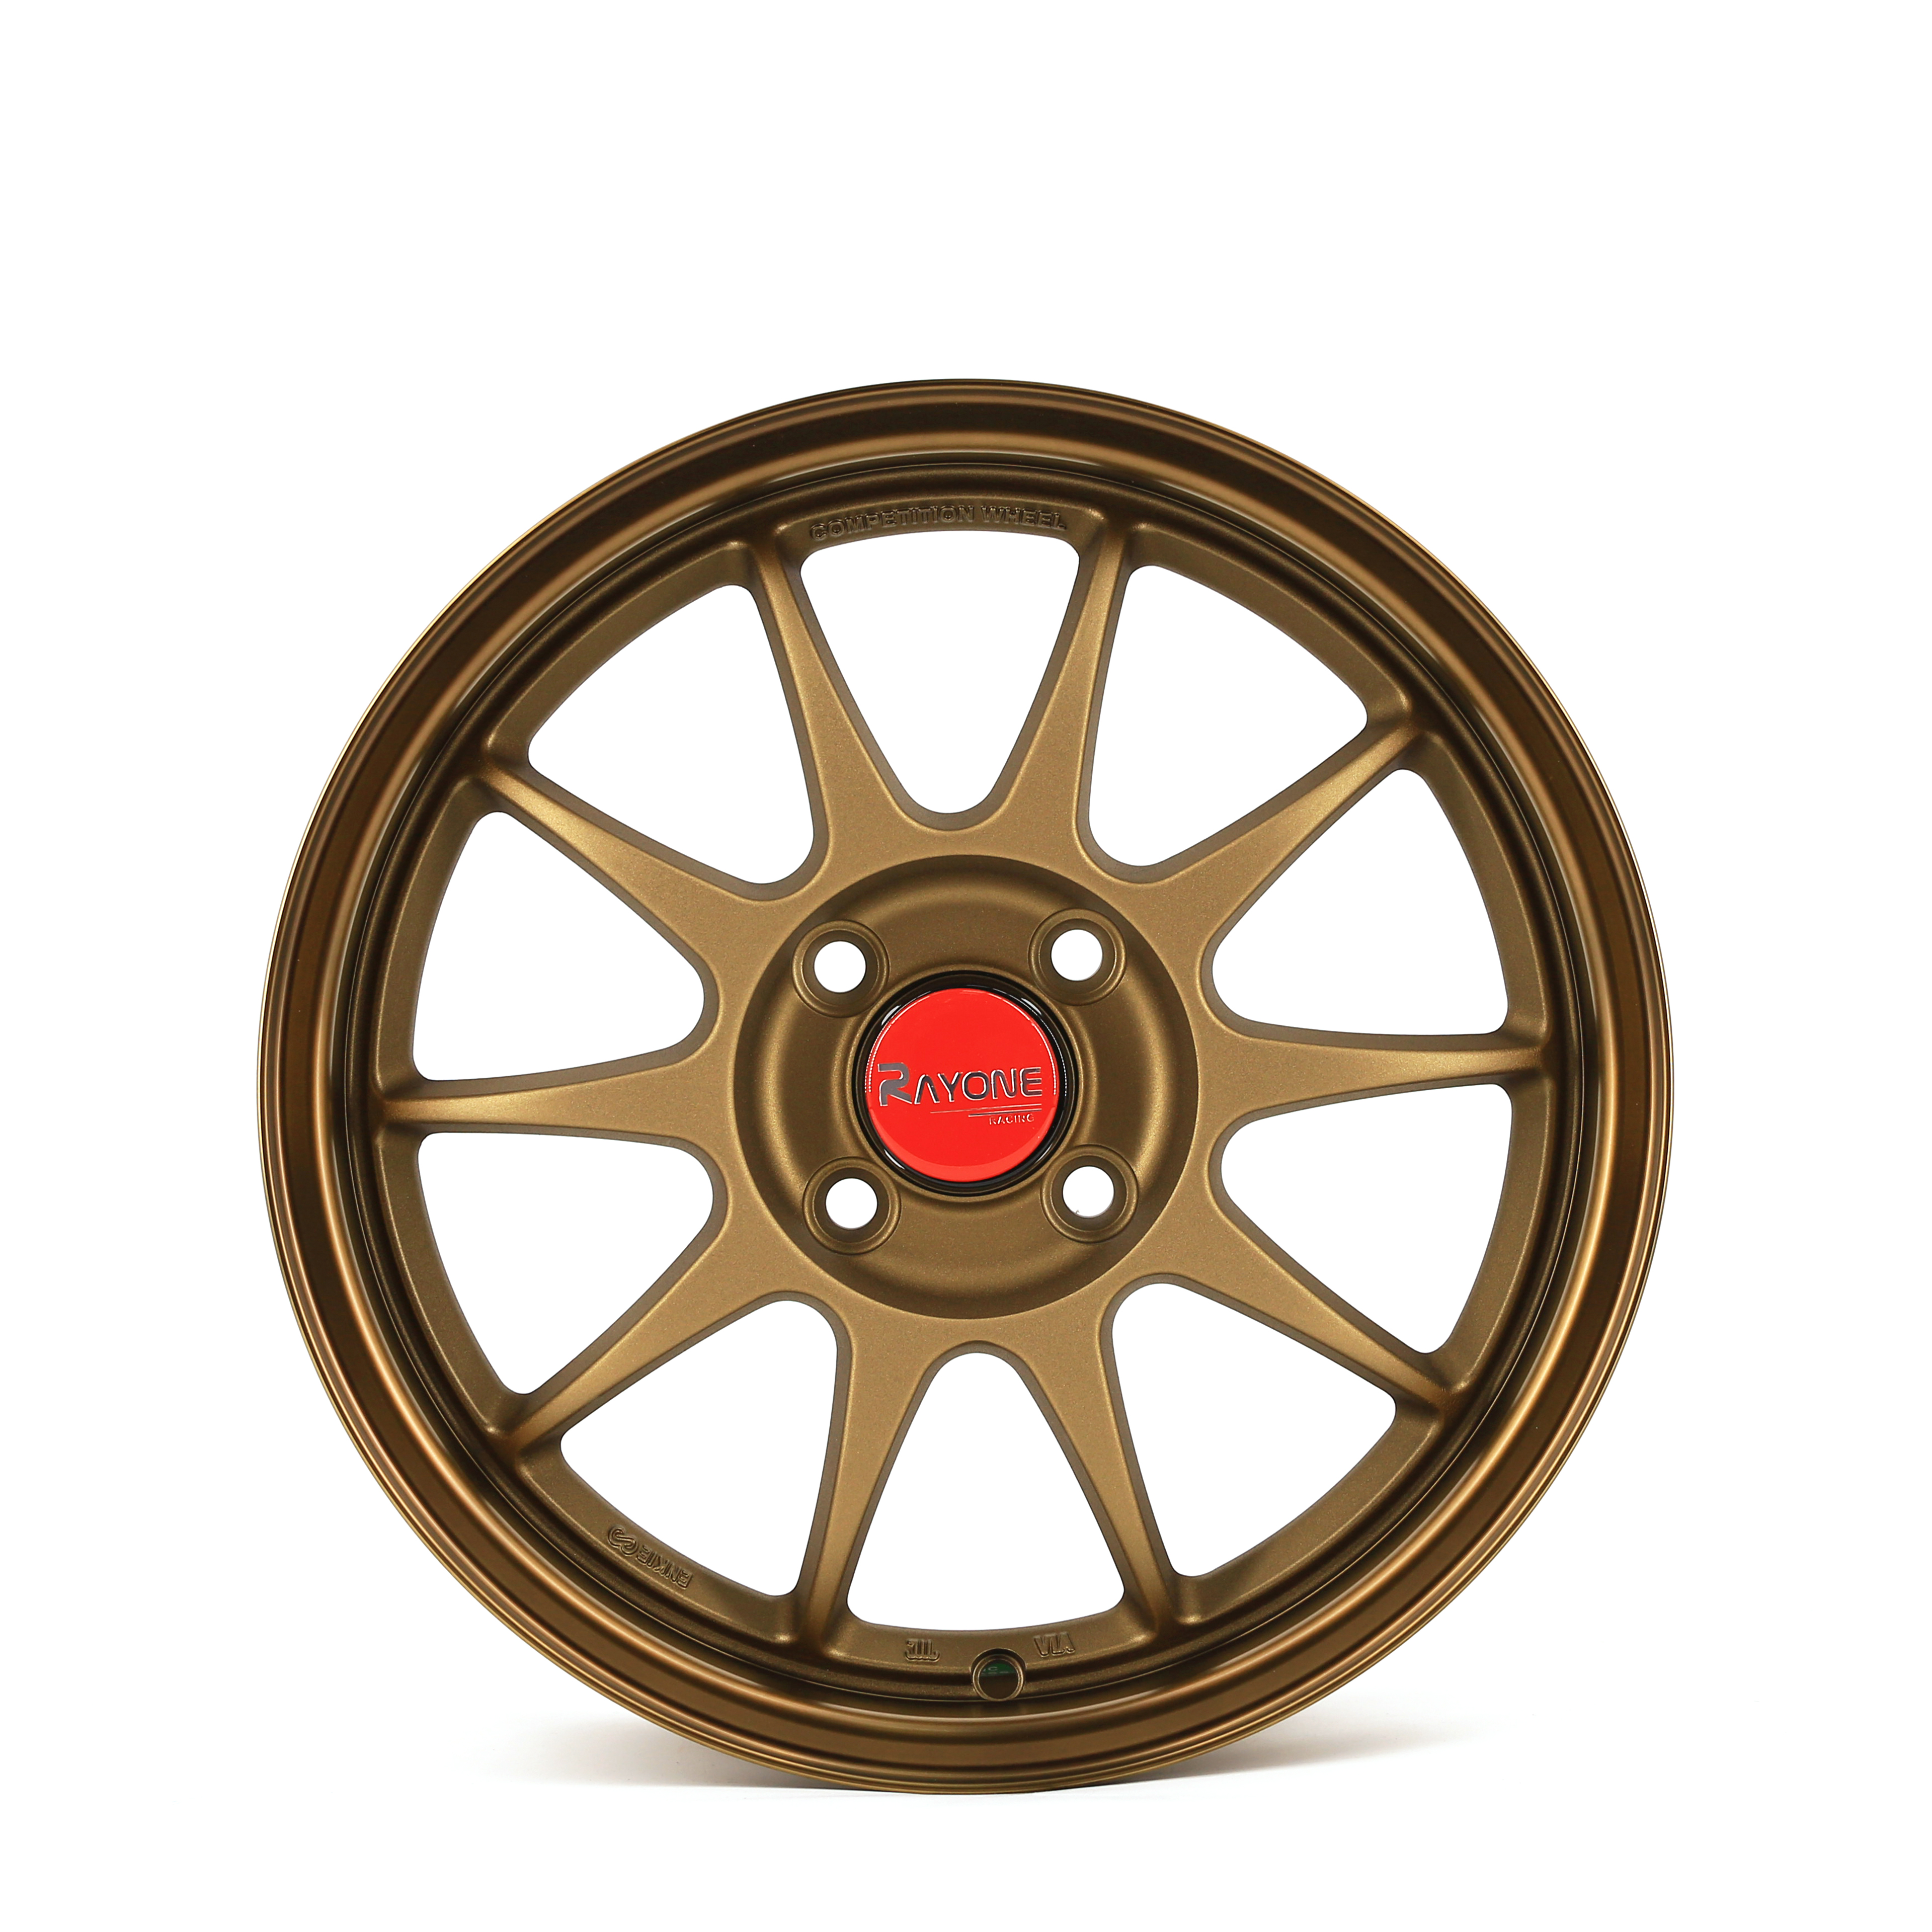 Rayone 681 Classical 10-Spoke Design 15inch Bronze Finish Car Alloy Wheels